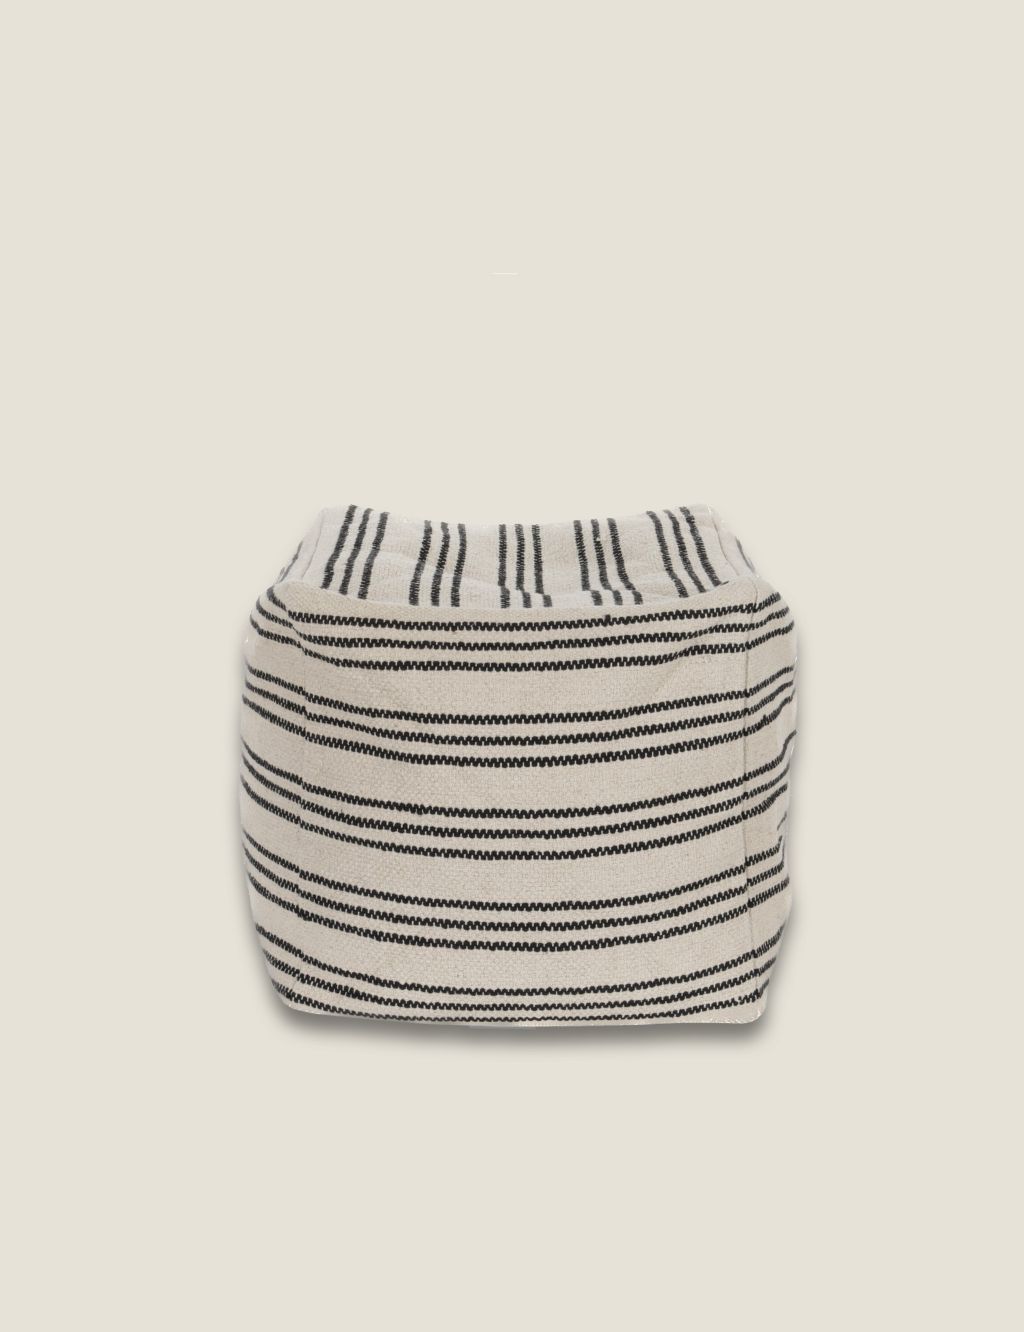 Striped Pouffe image 1